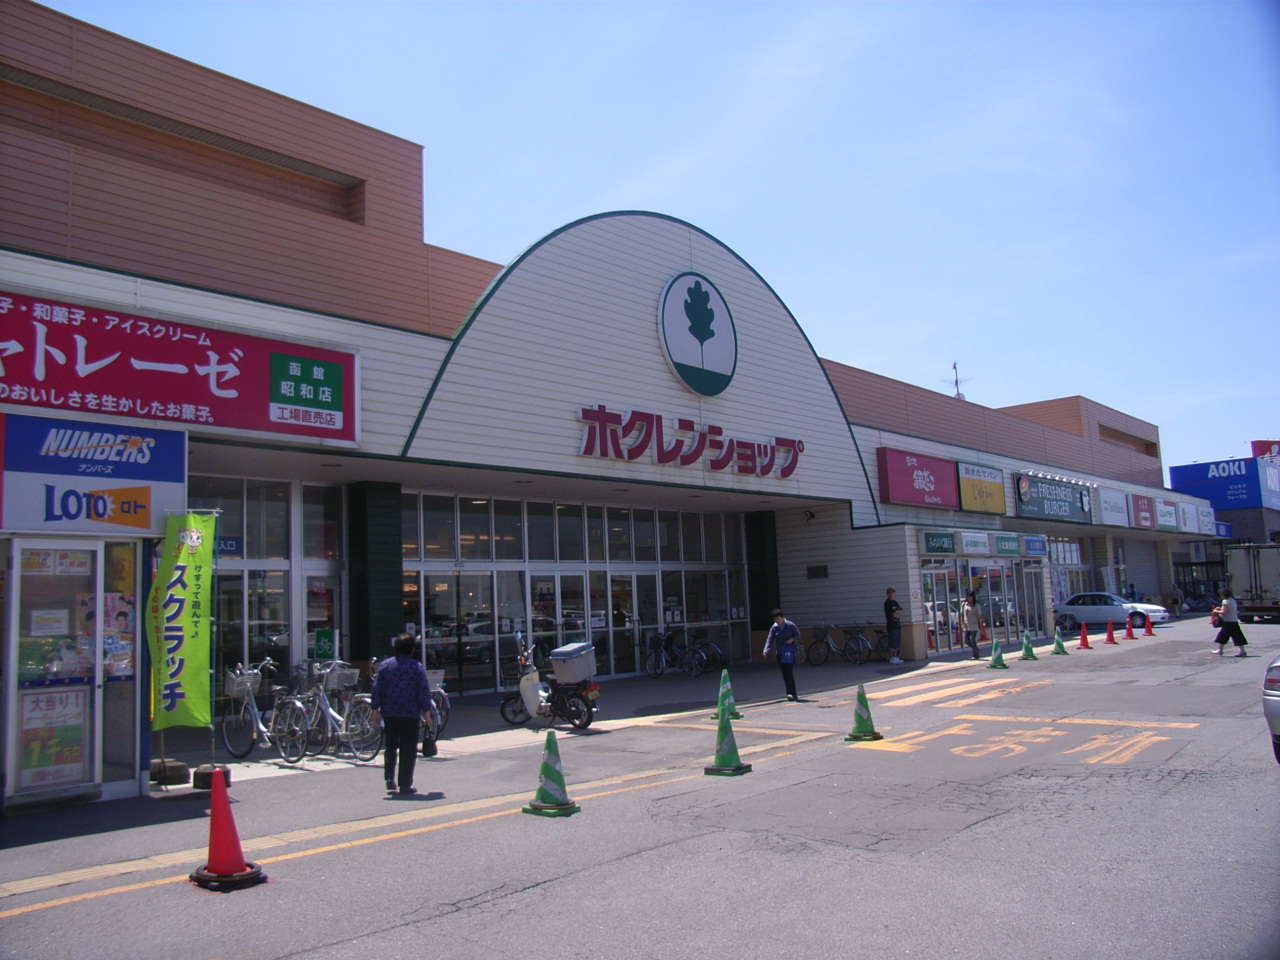 Supermarket. Hokuren shop 569m to Hakodate Showa store (Super)